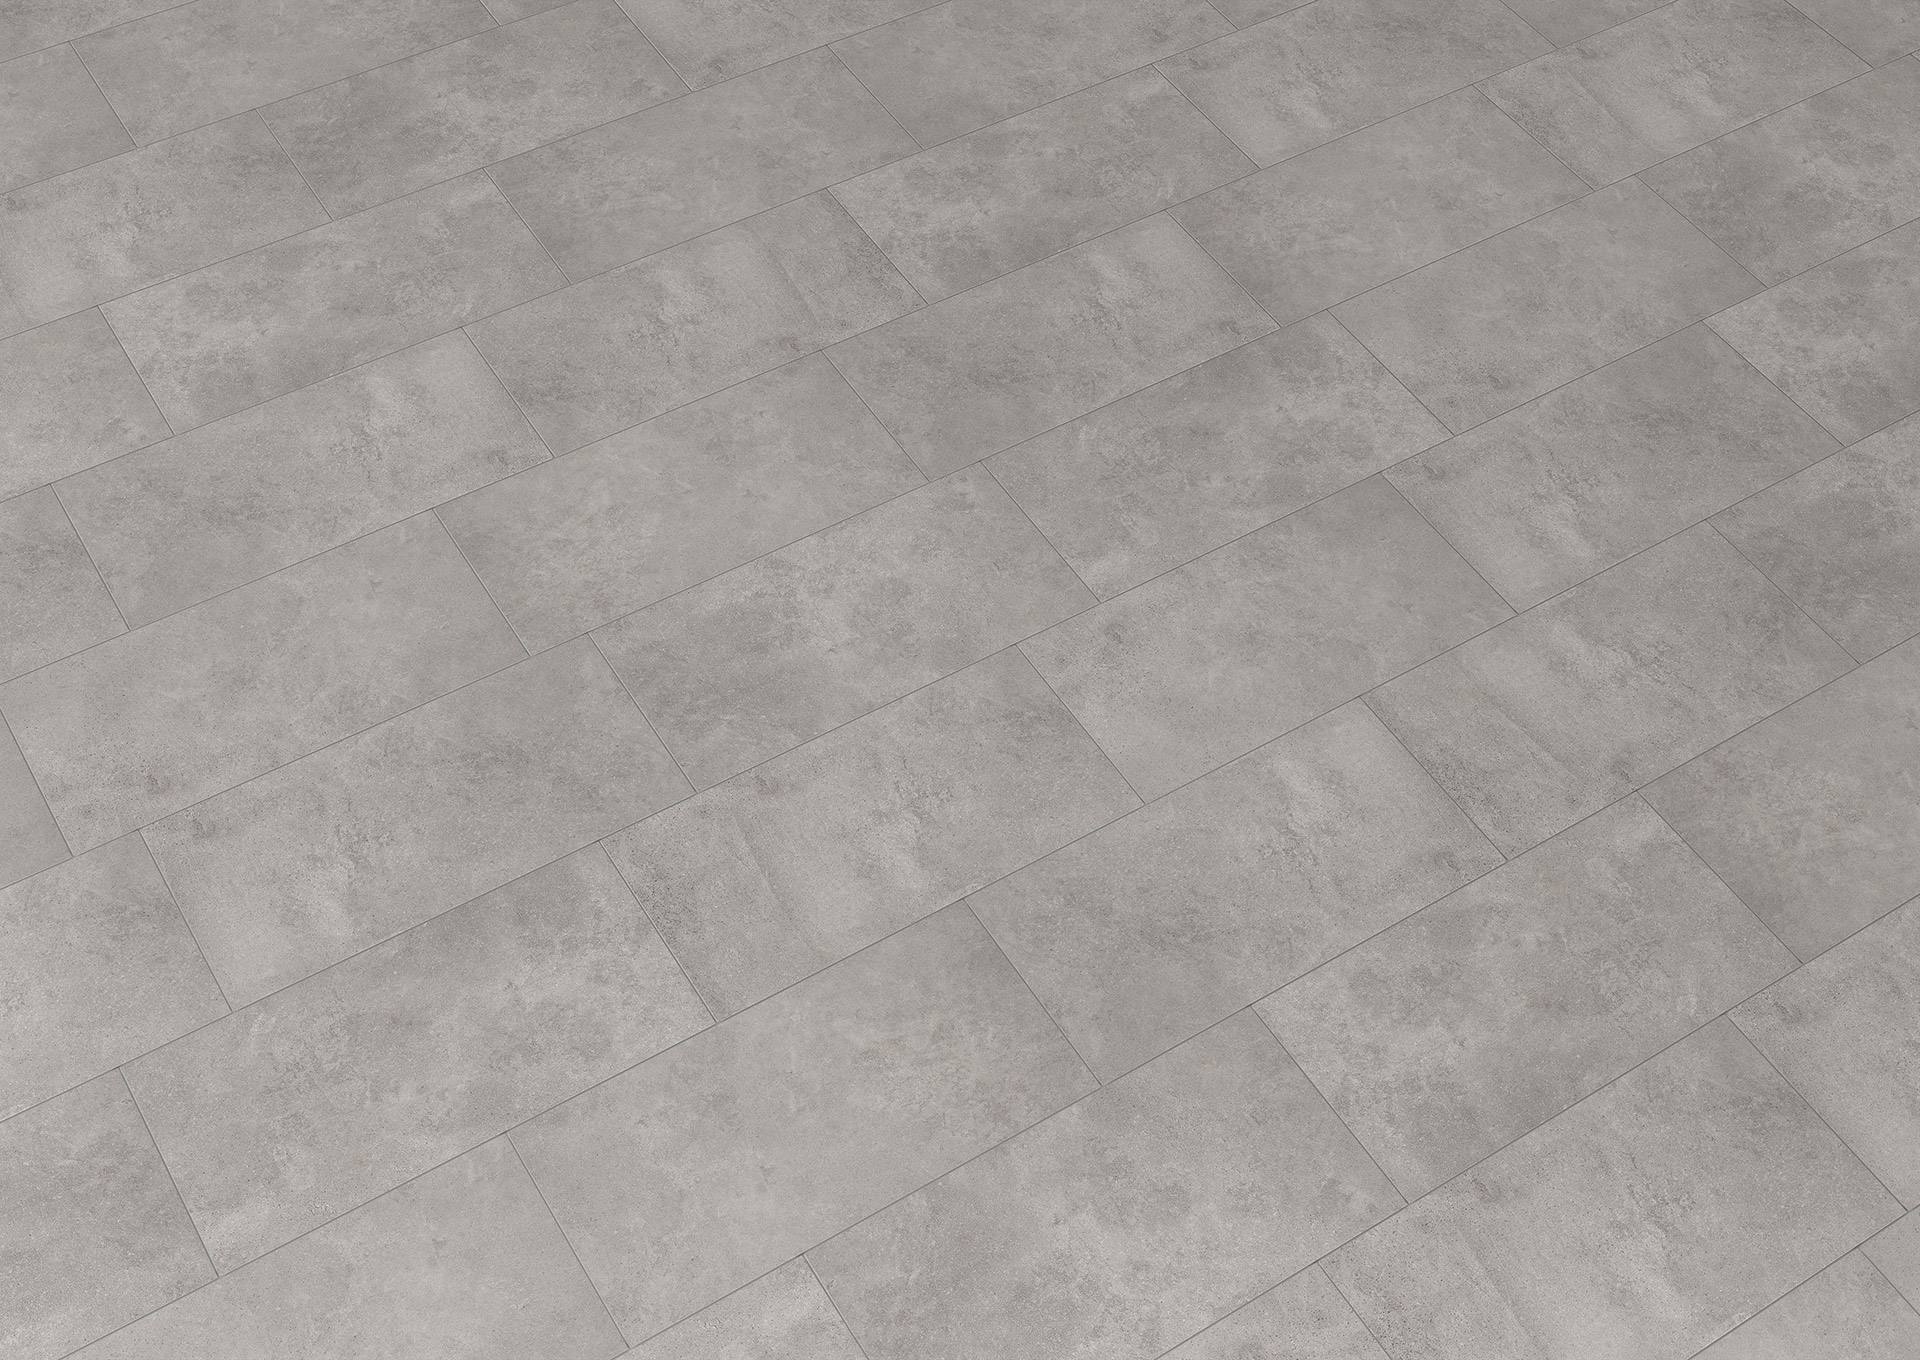 Duncan light grey 30x60 flooring